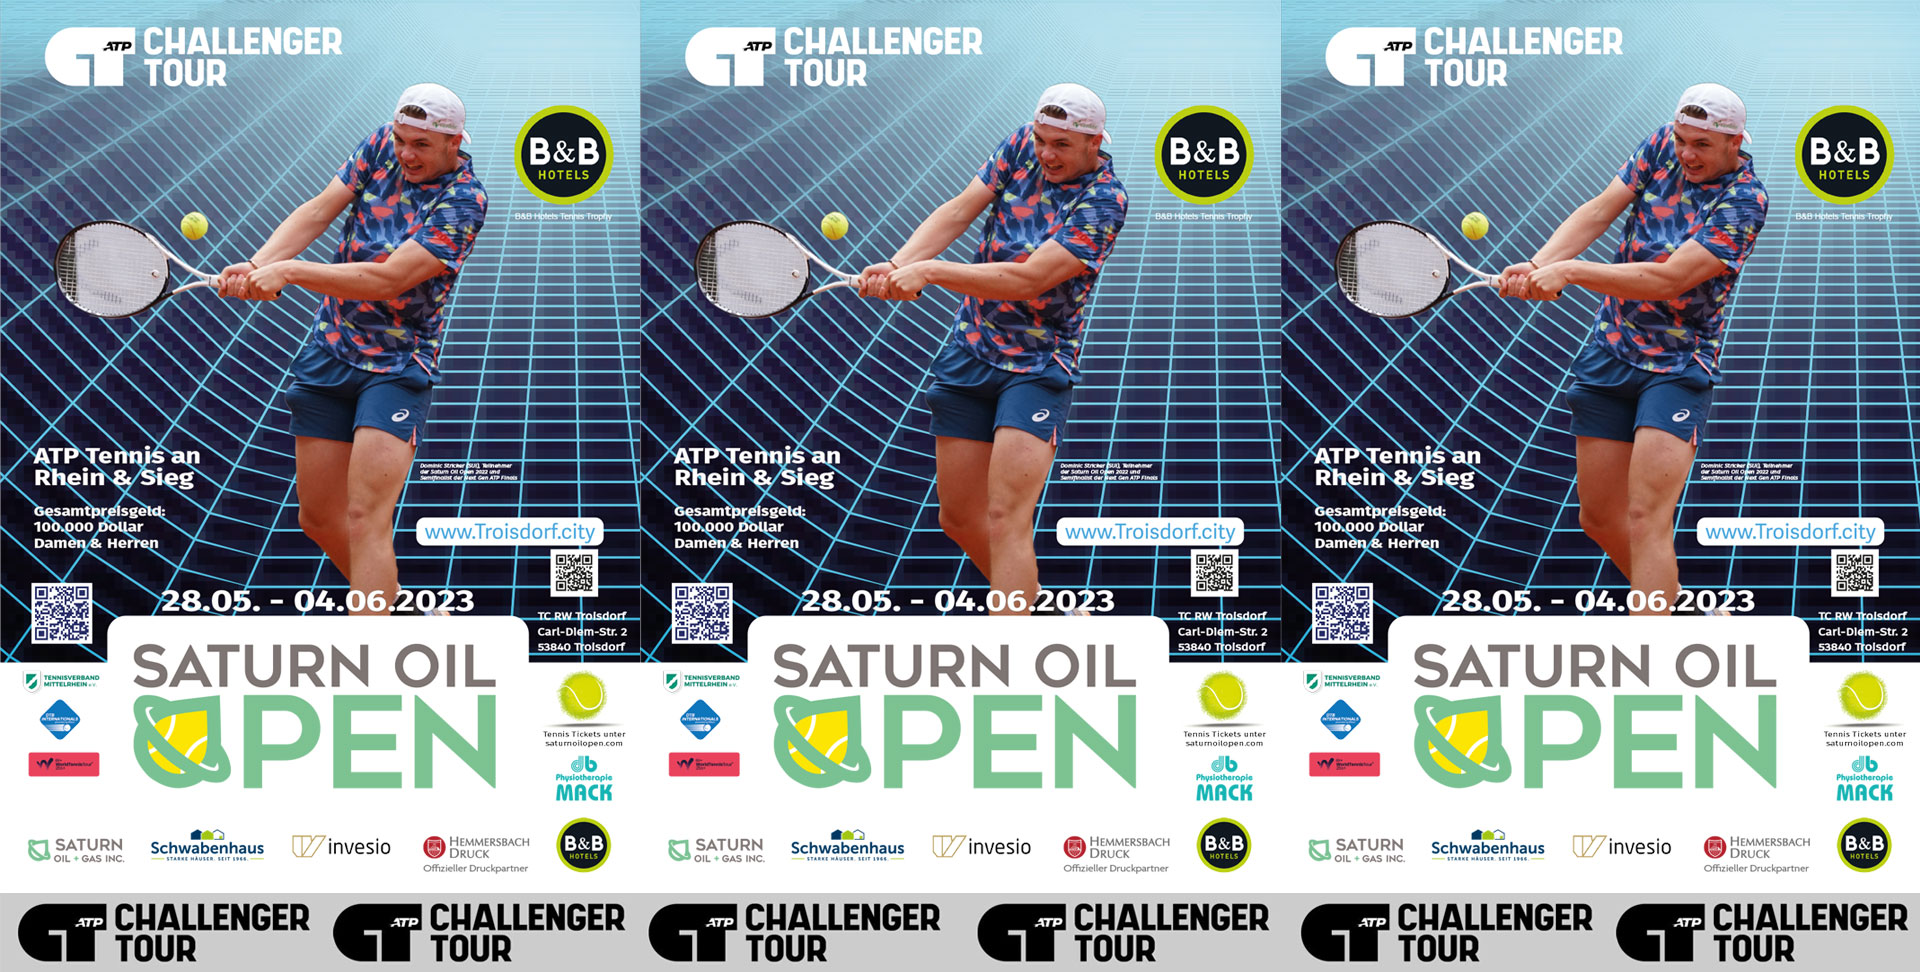 28.05.-04.06.2023 Saturn Oil Open ATP-Tennis an Rhein and Sieg + ITF Damen World Tennis Tour